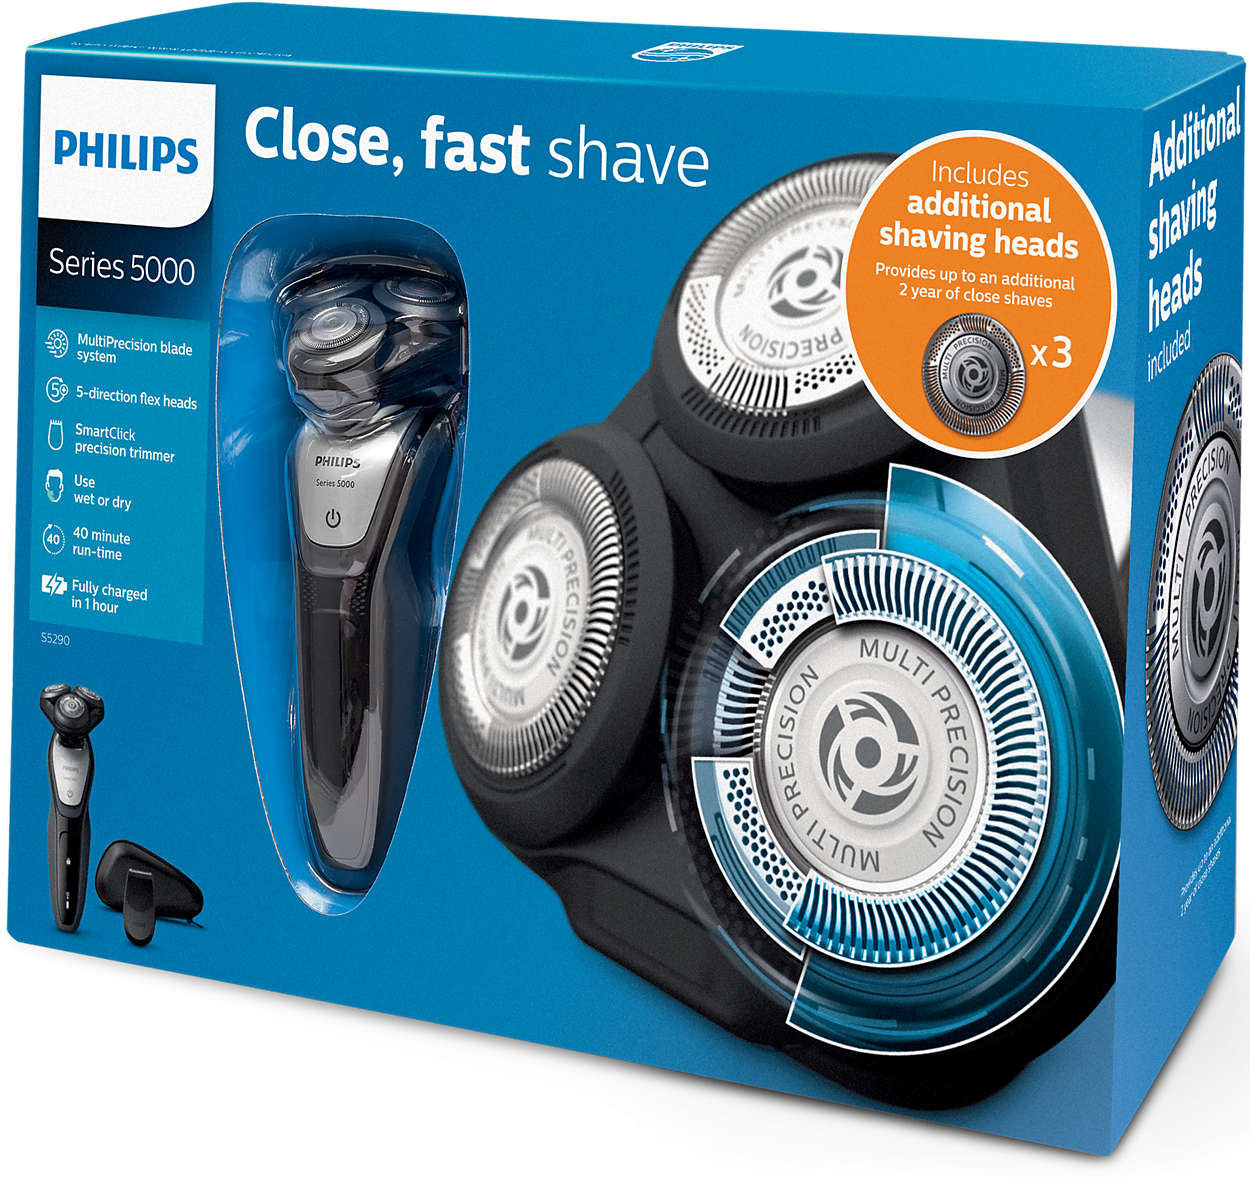 Филипс series 5000. Philips Shaver Series 5000. Philips Norelco 5000 Series. Philips Shave со станцией очистки. Clean close fast Shave Series 5000.